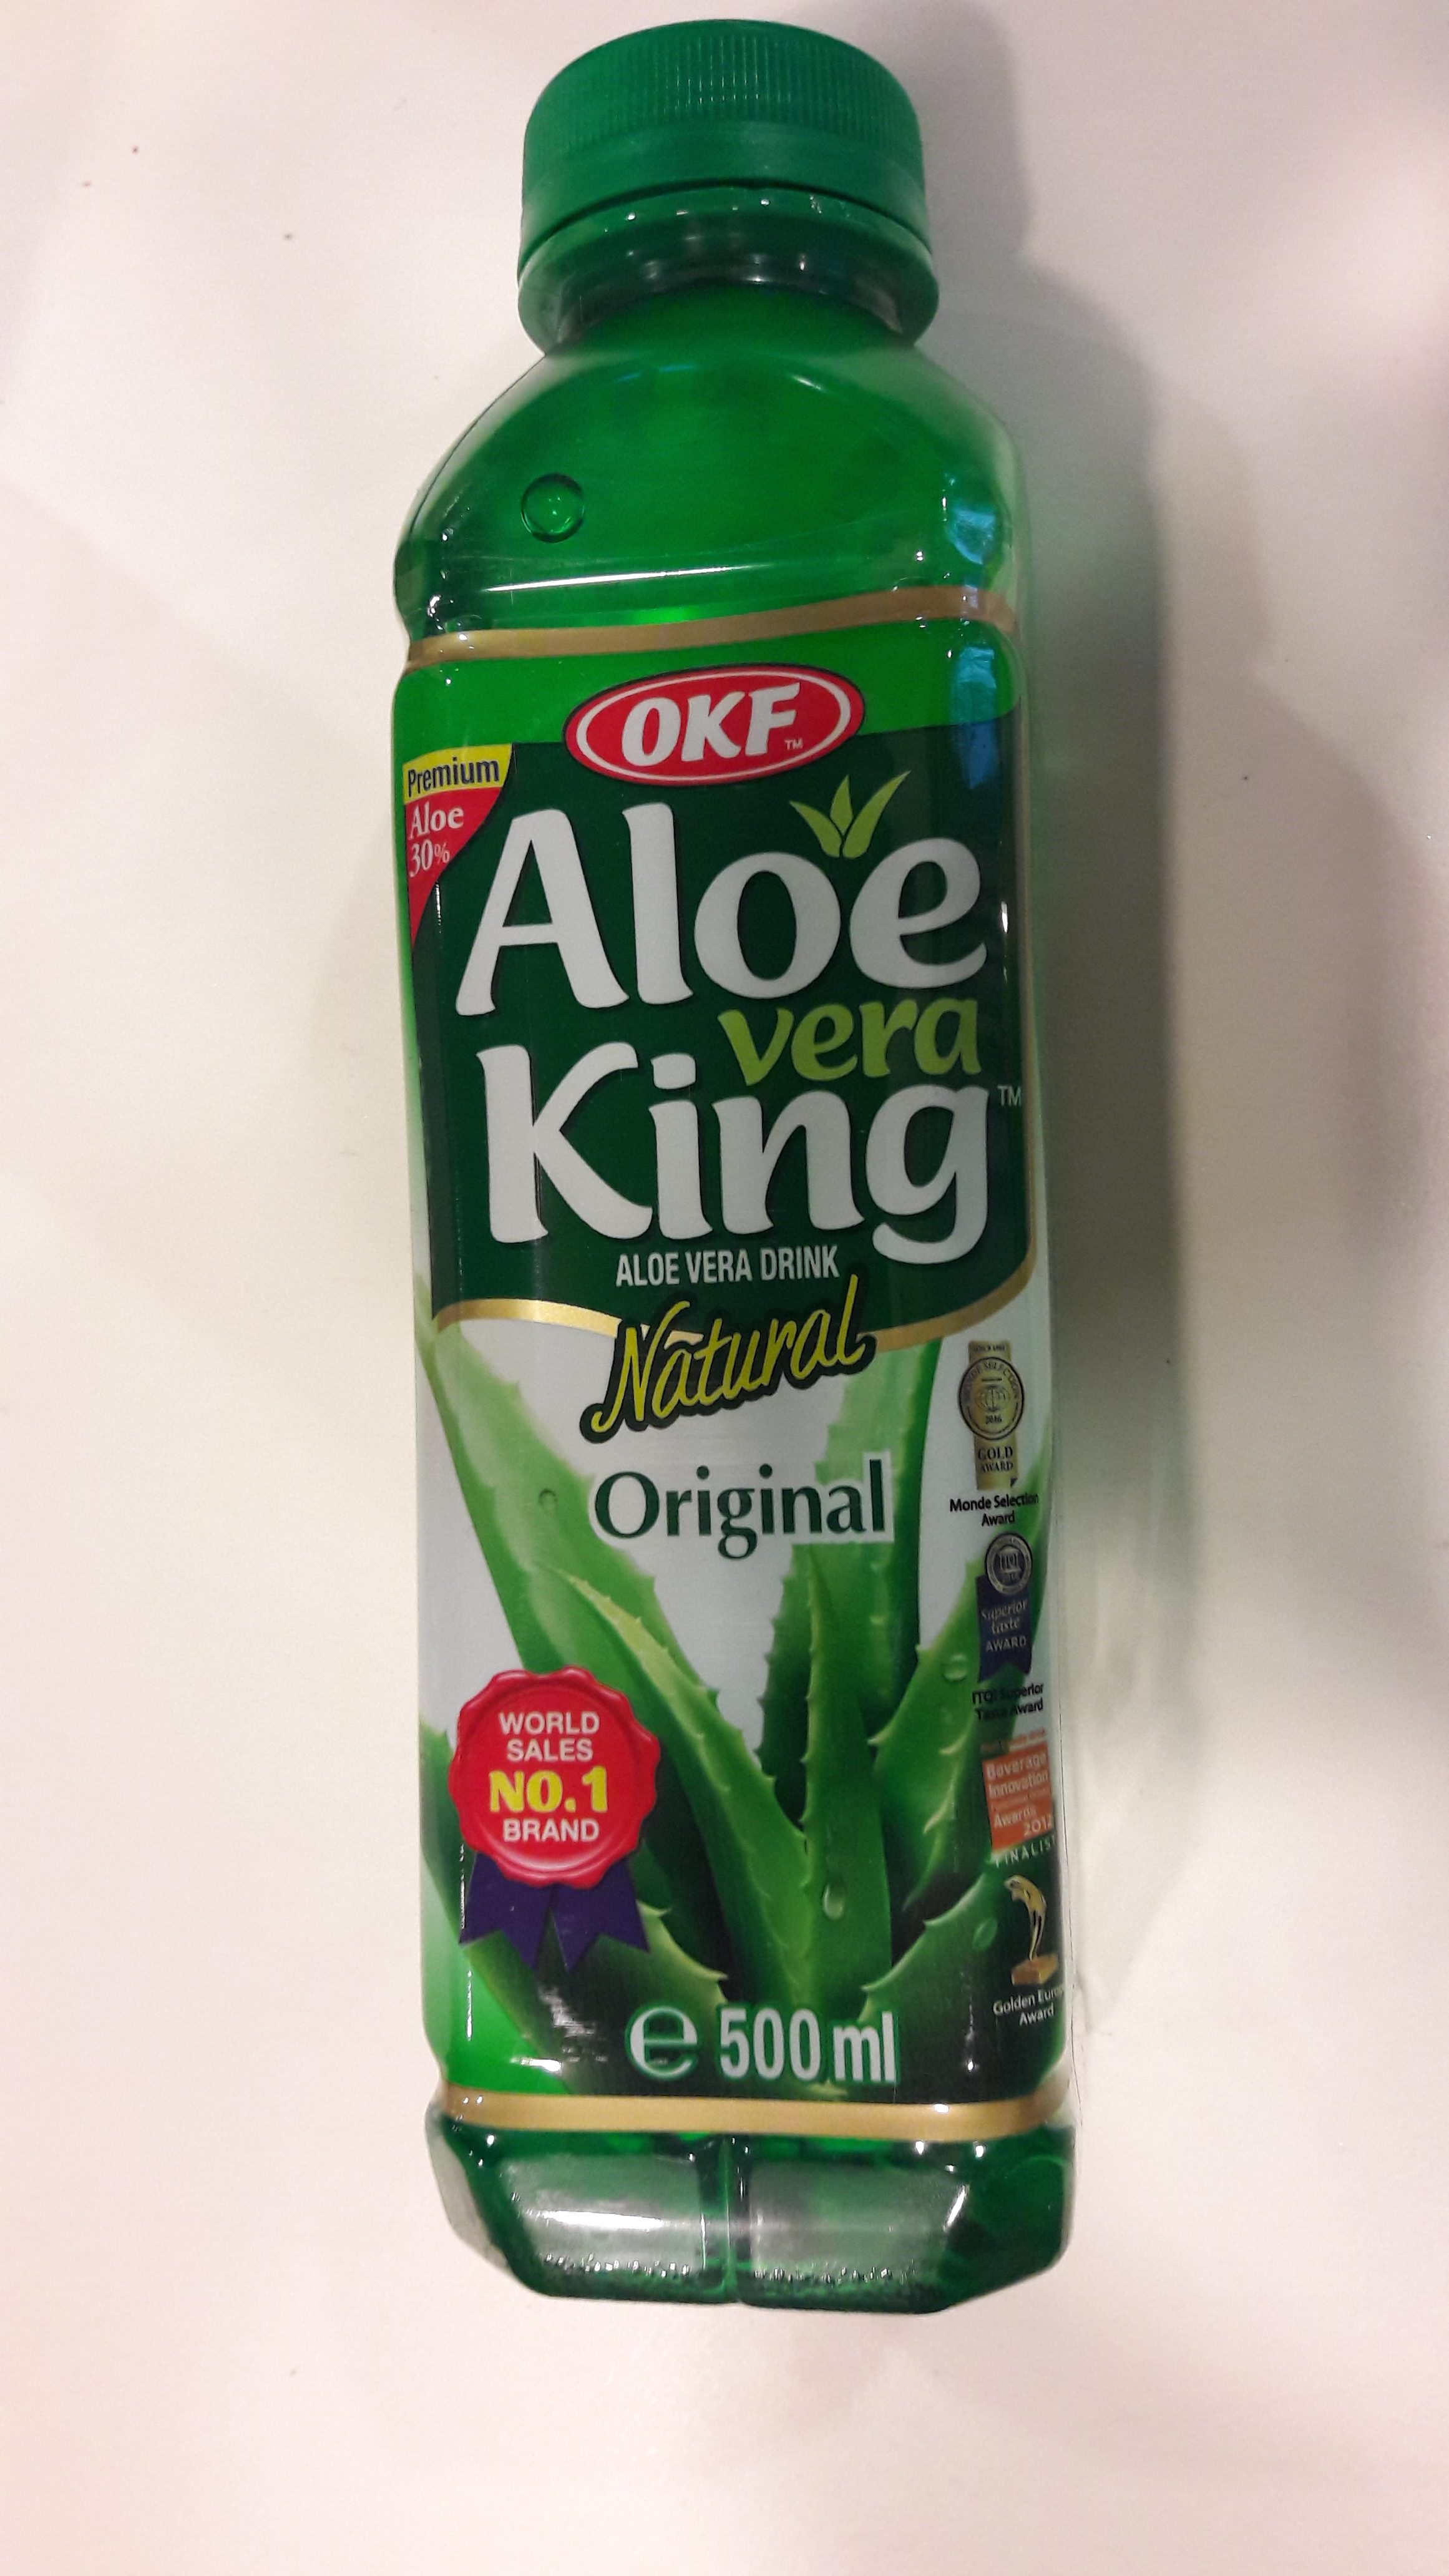 Aloe Vera king - 1.5L Image